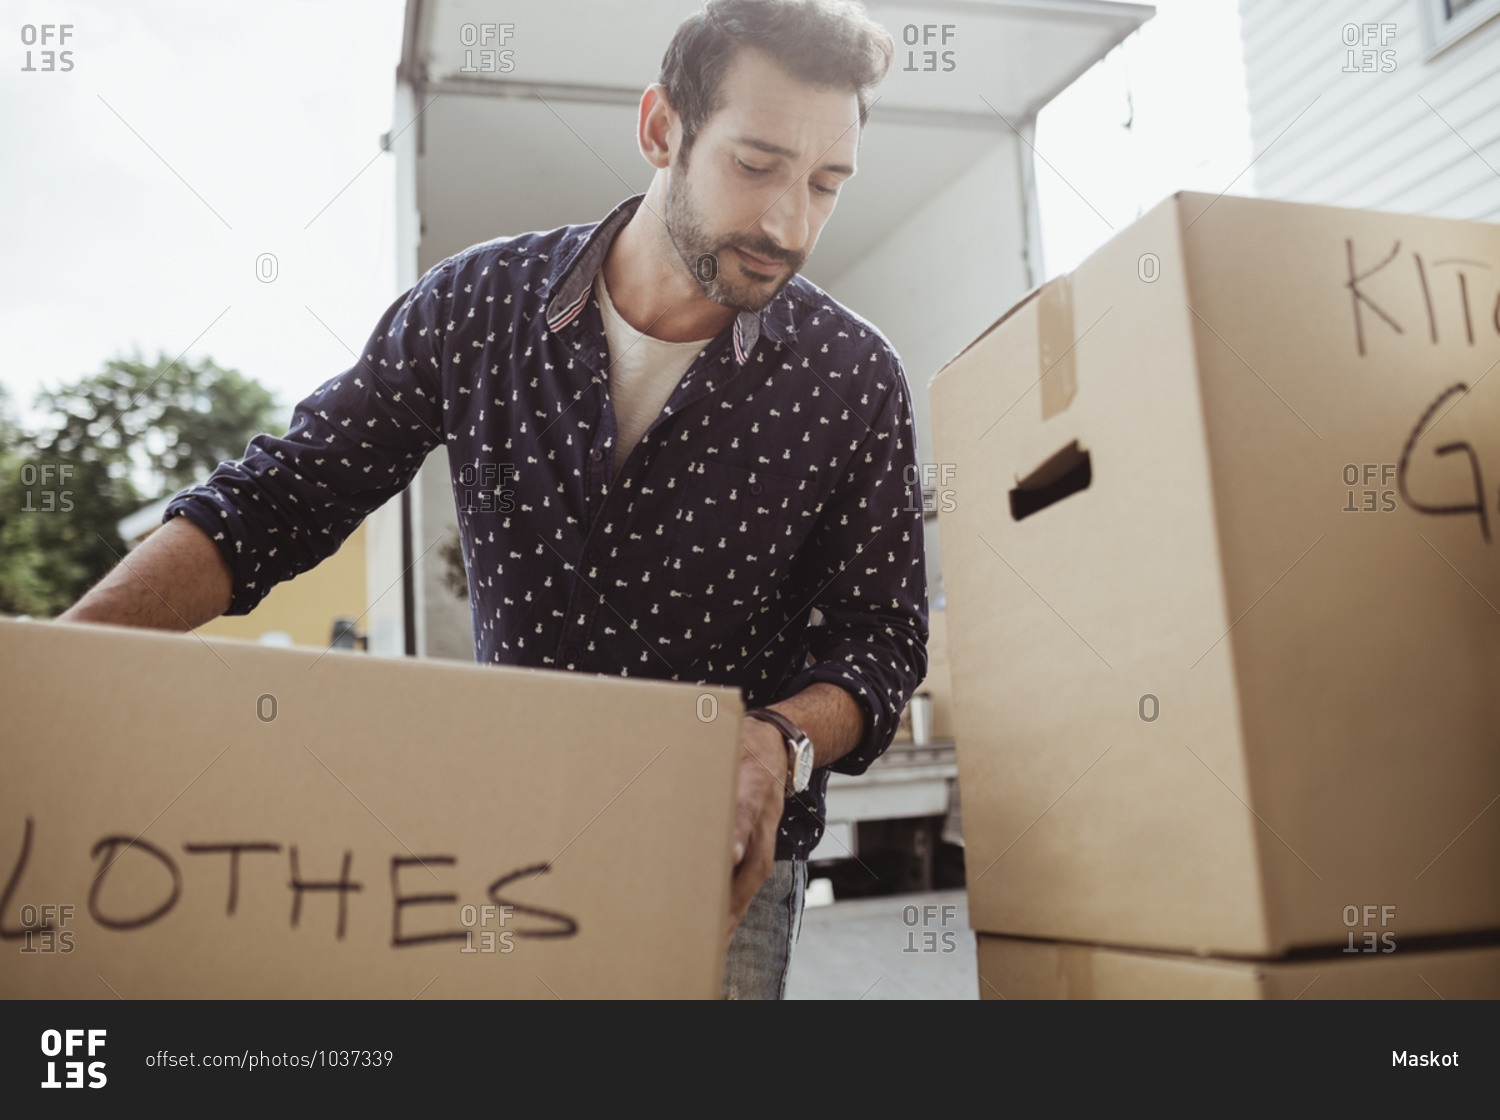 Man unloading cardboard boxes outside van